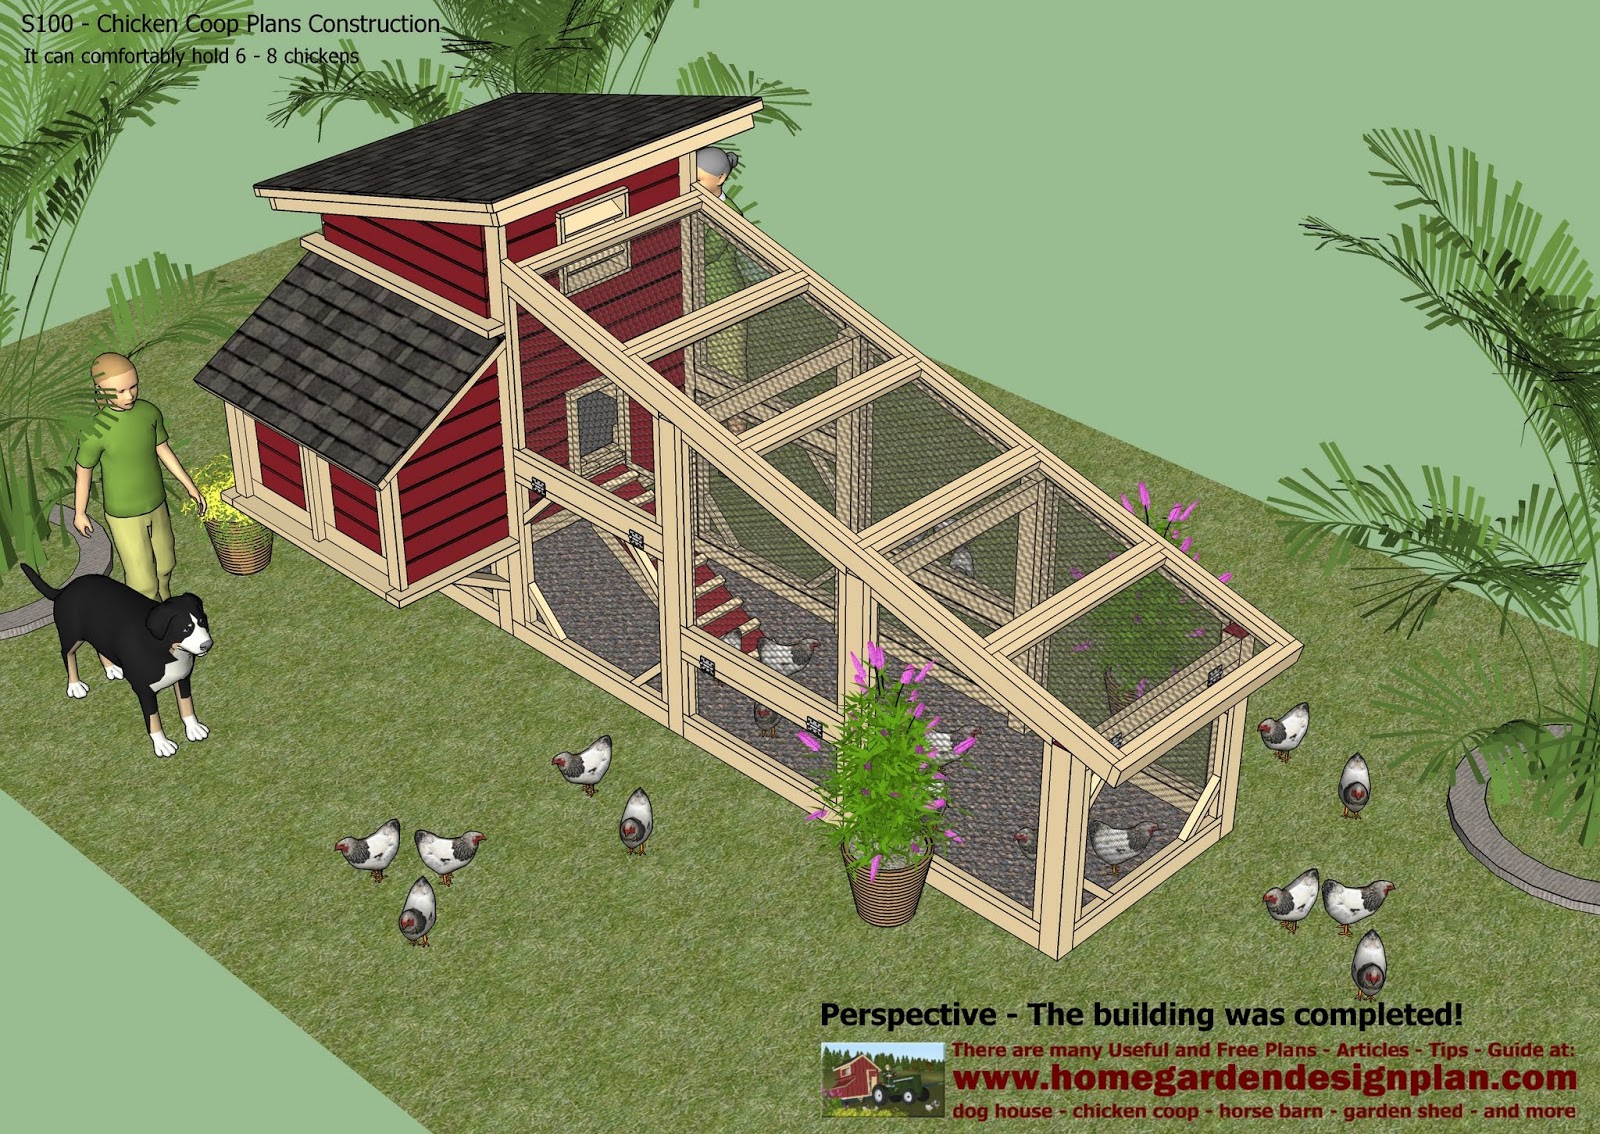 home garden plans: home garden plans: S100 - Chicken Coop ...